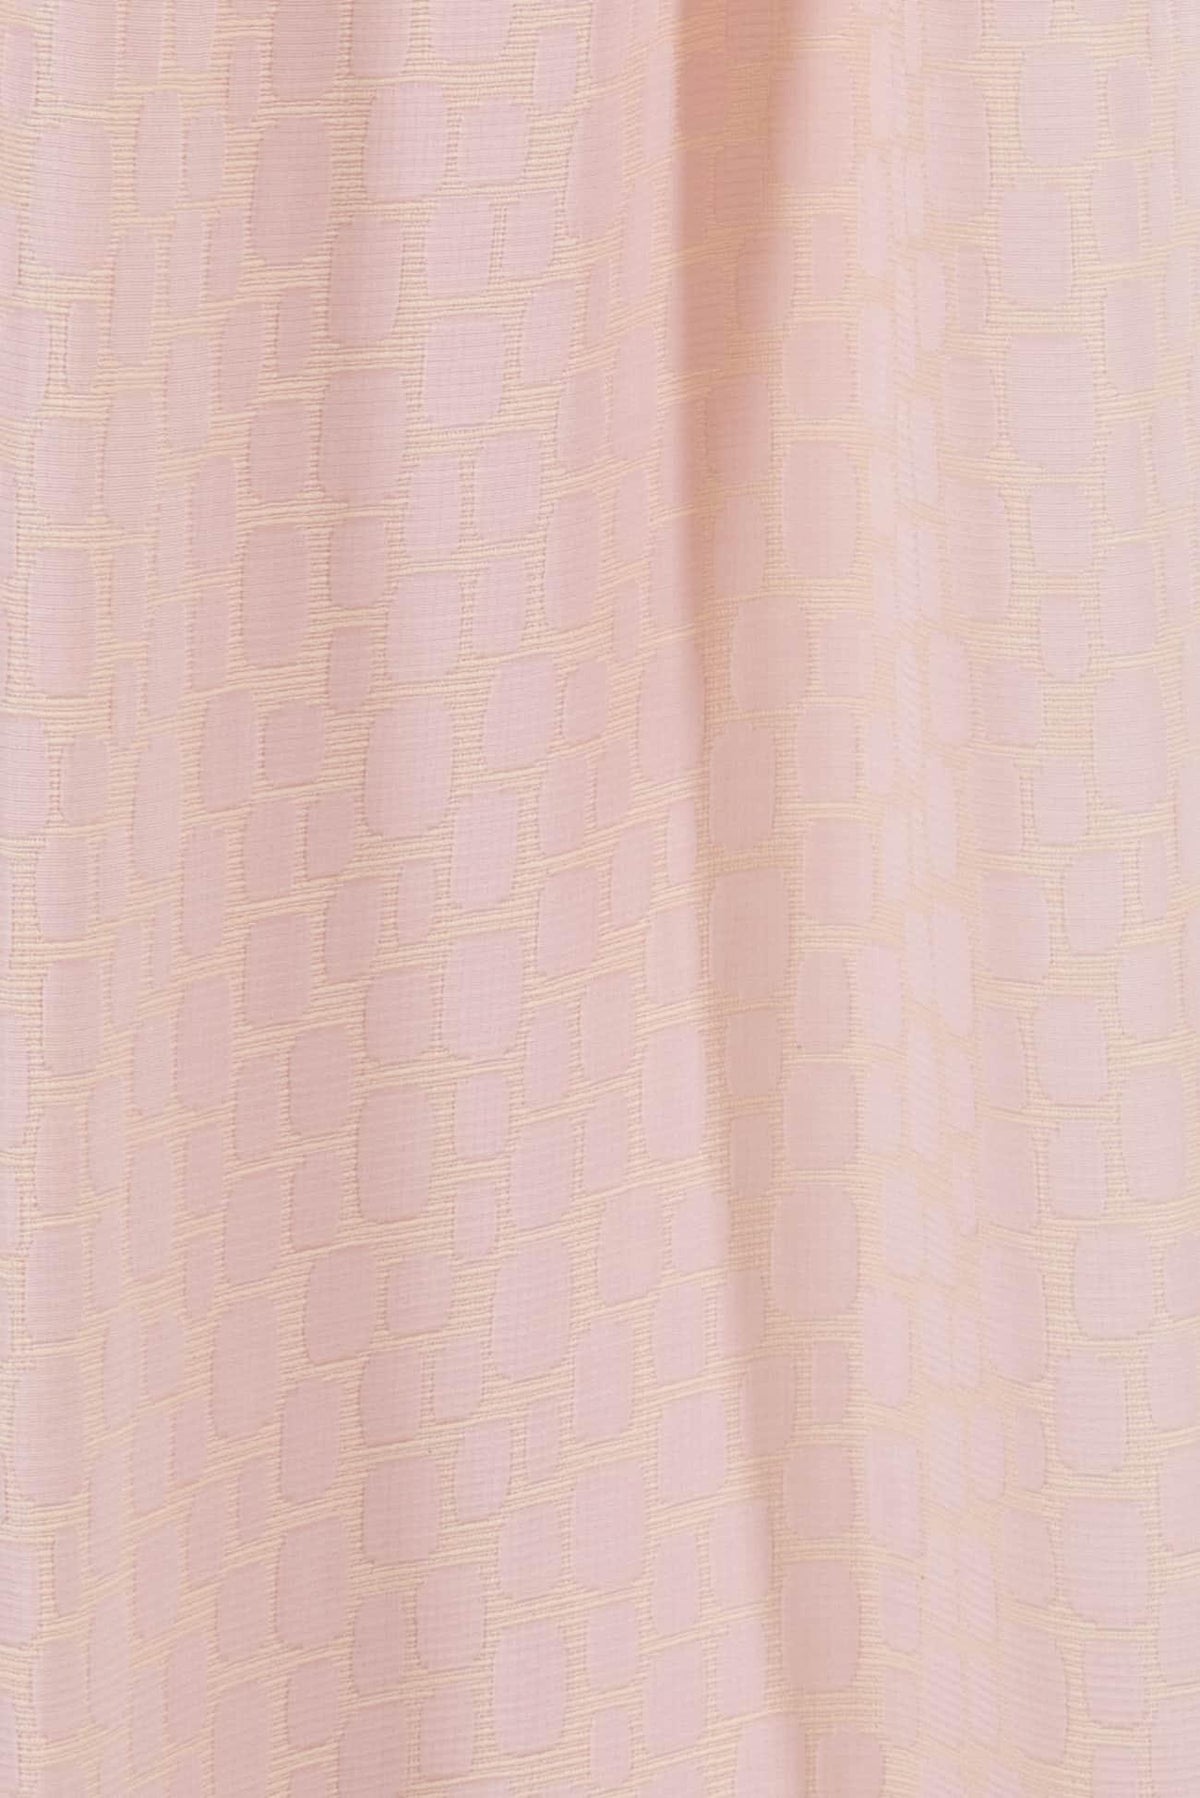 Powder Puff Pink French Jacquard Woven - Marcy Tilton Fabrics